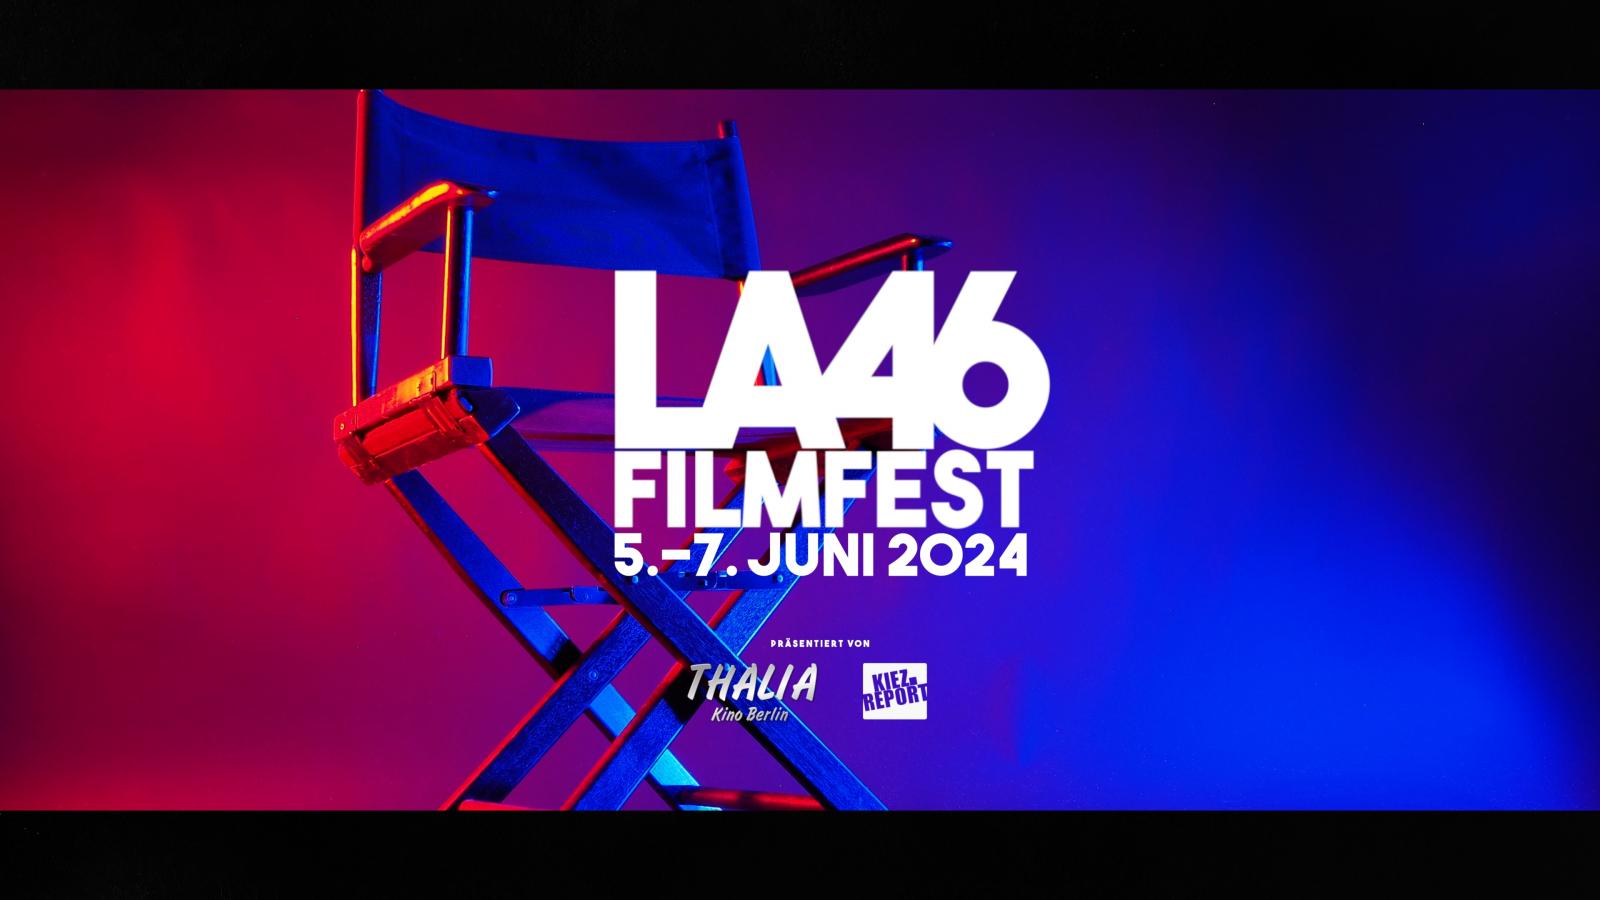 LA46 - Filmfest